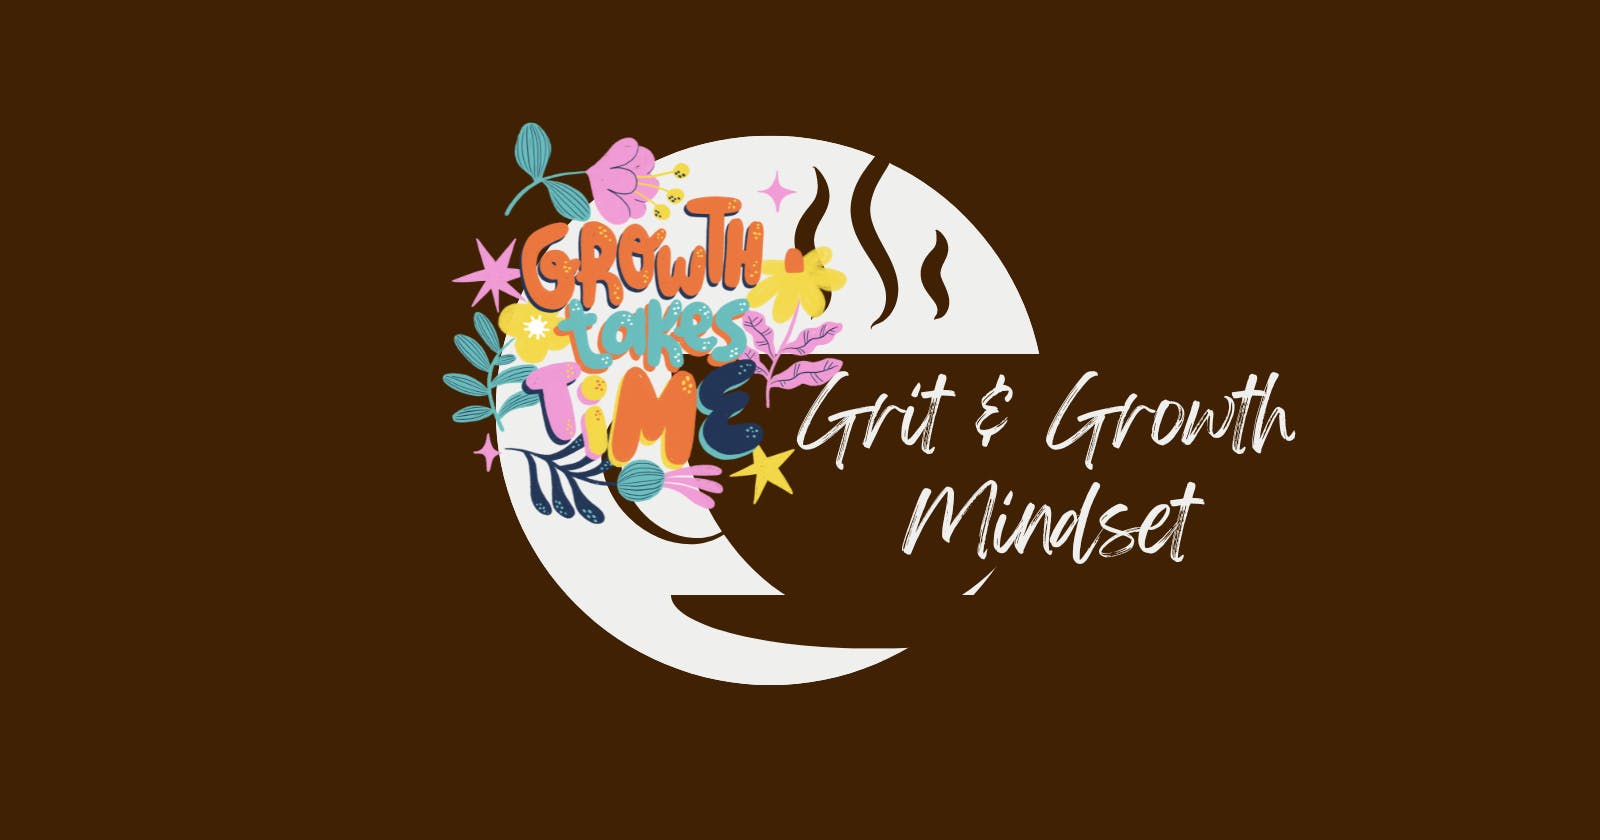 Grit & Growth mindset